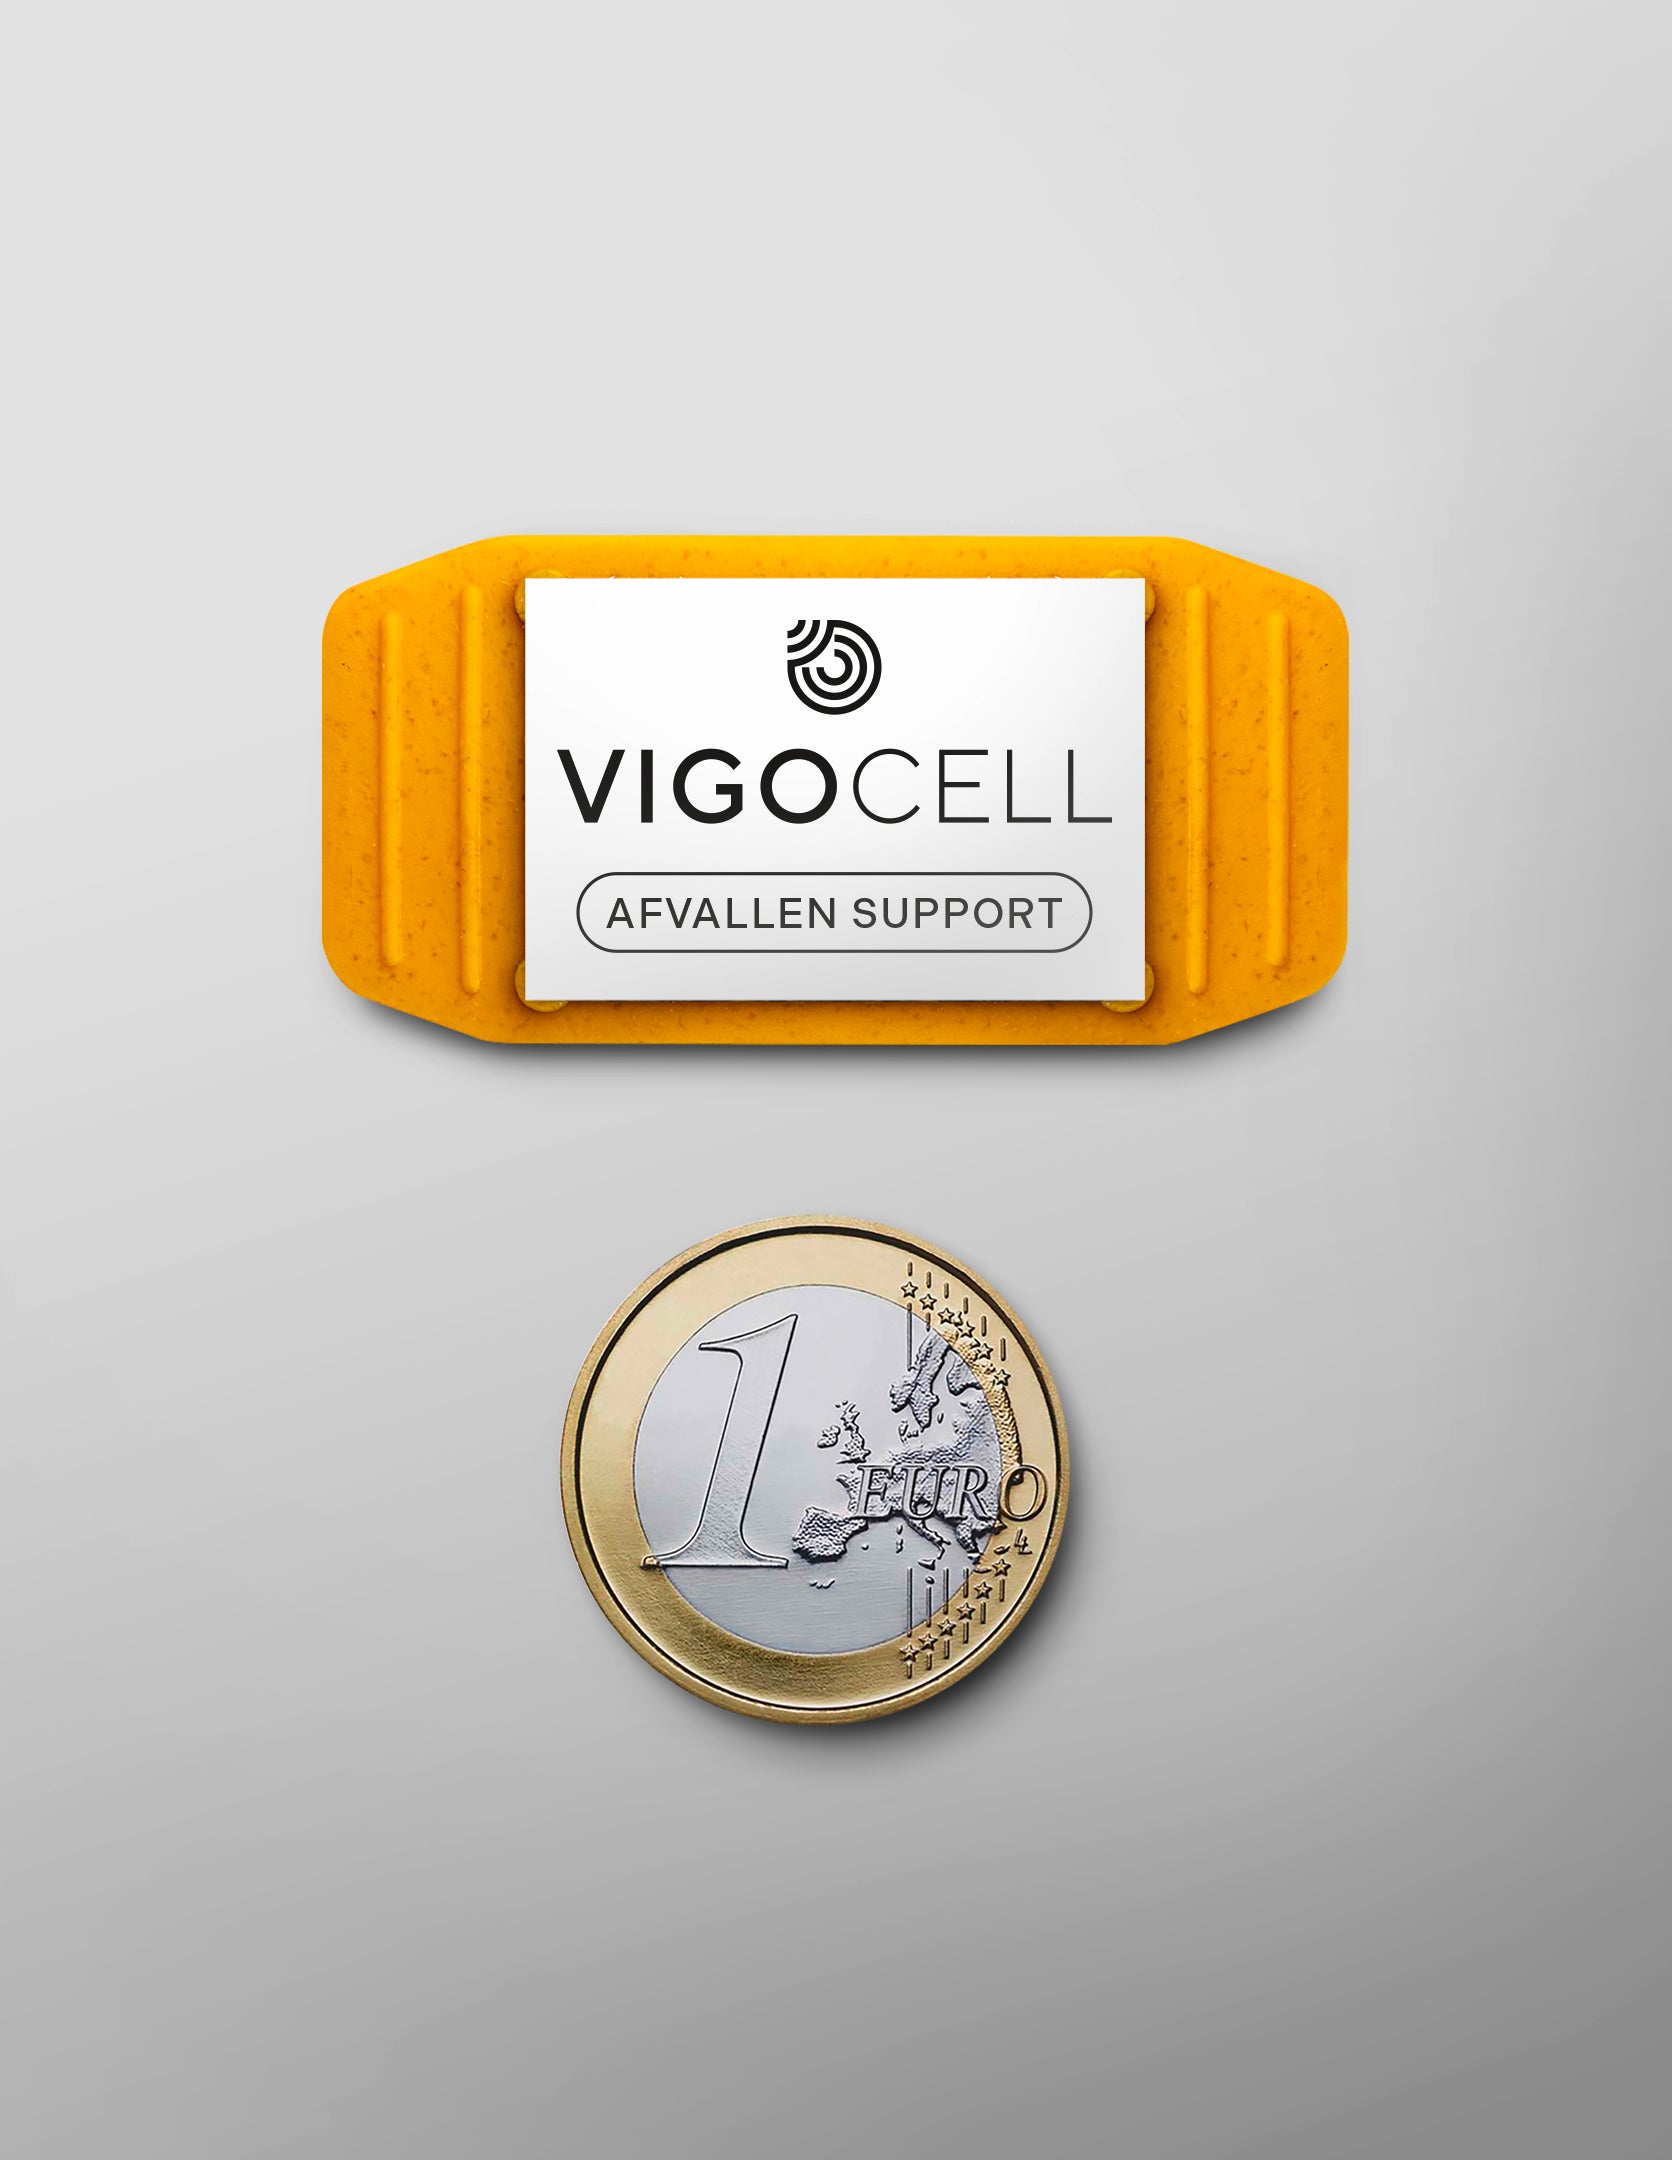 VigoCell Afvallen Support frequentiechip